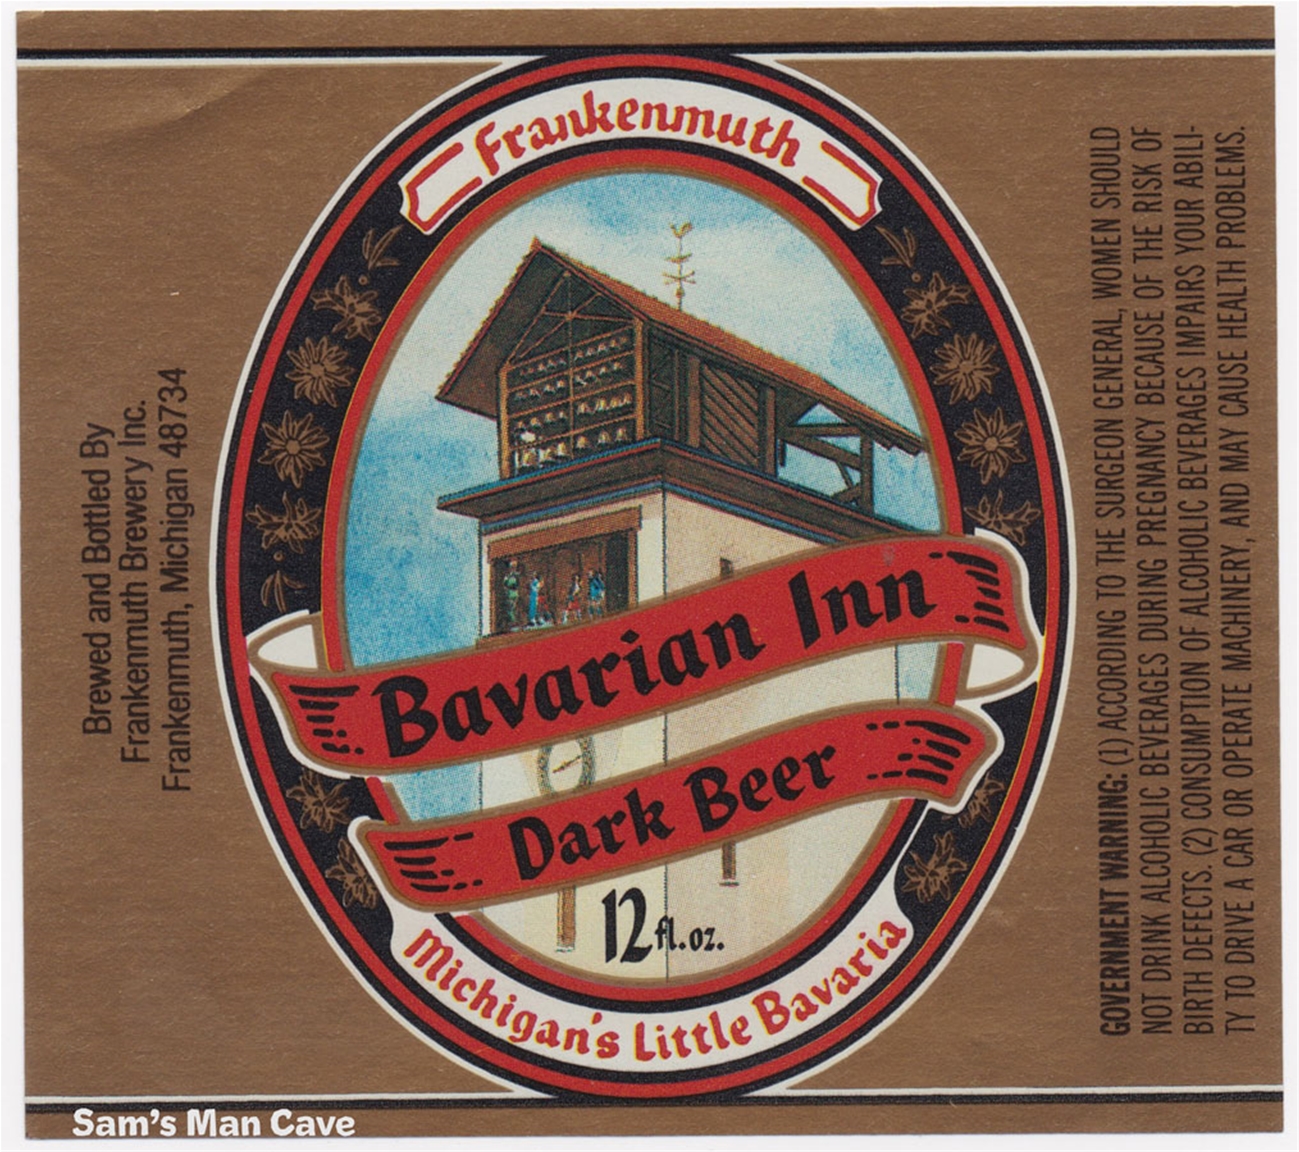 Frankenmuth Bavarian Inn Dark Beer Label